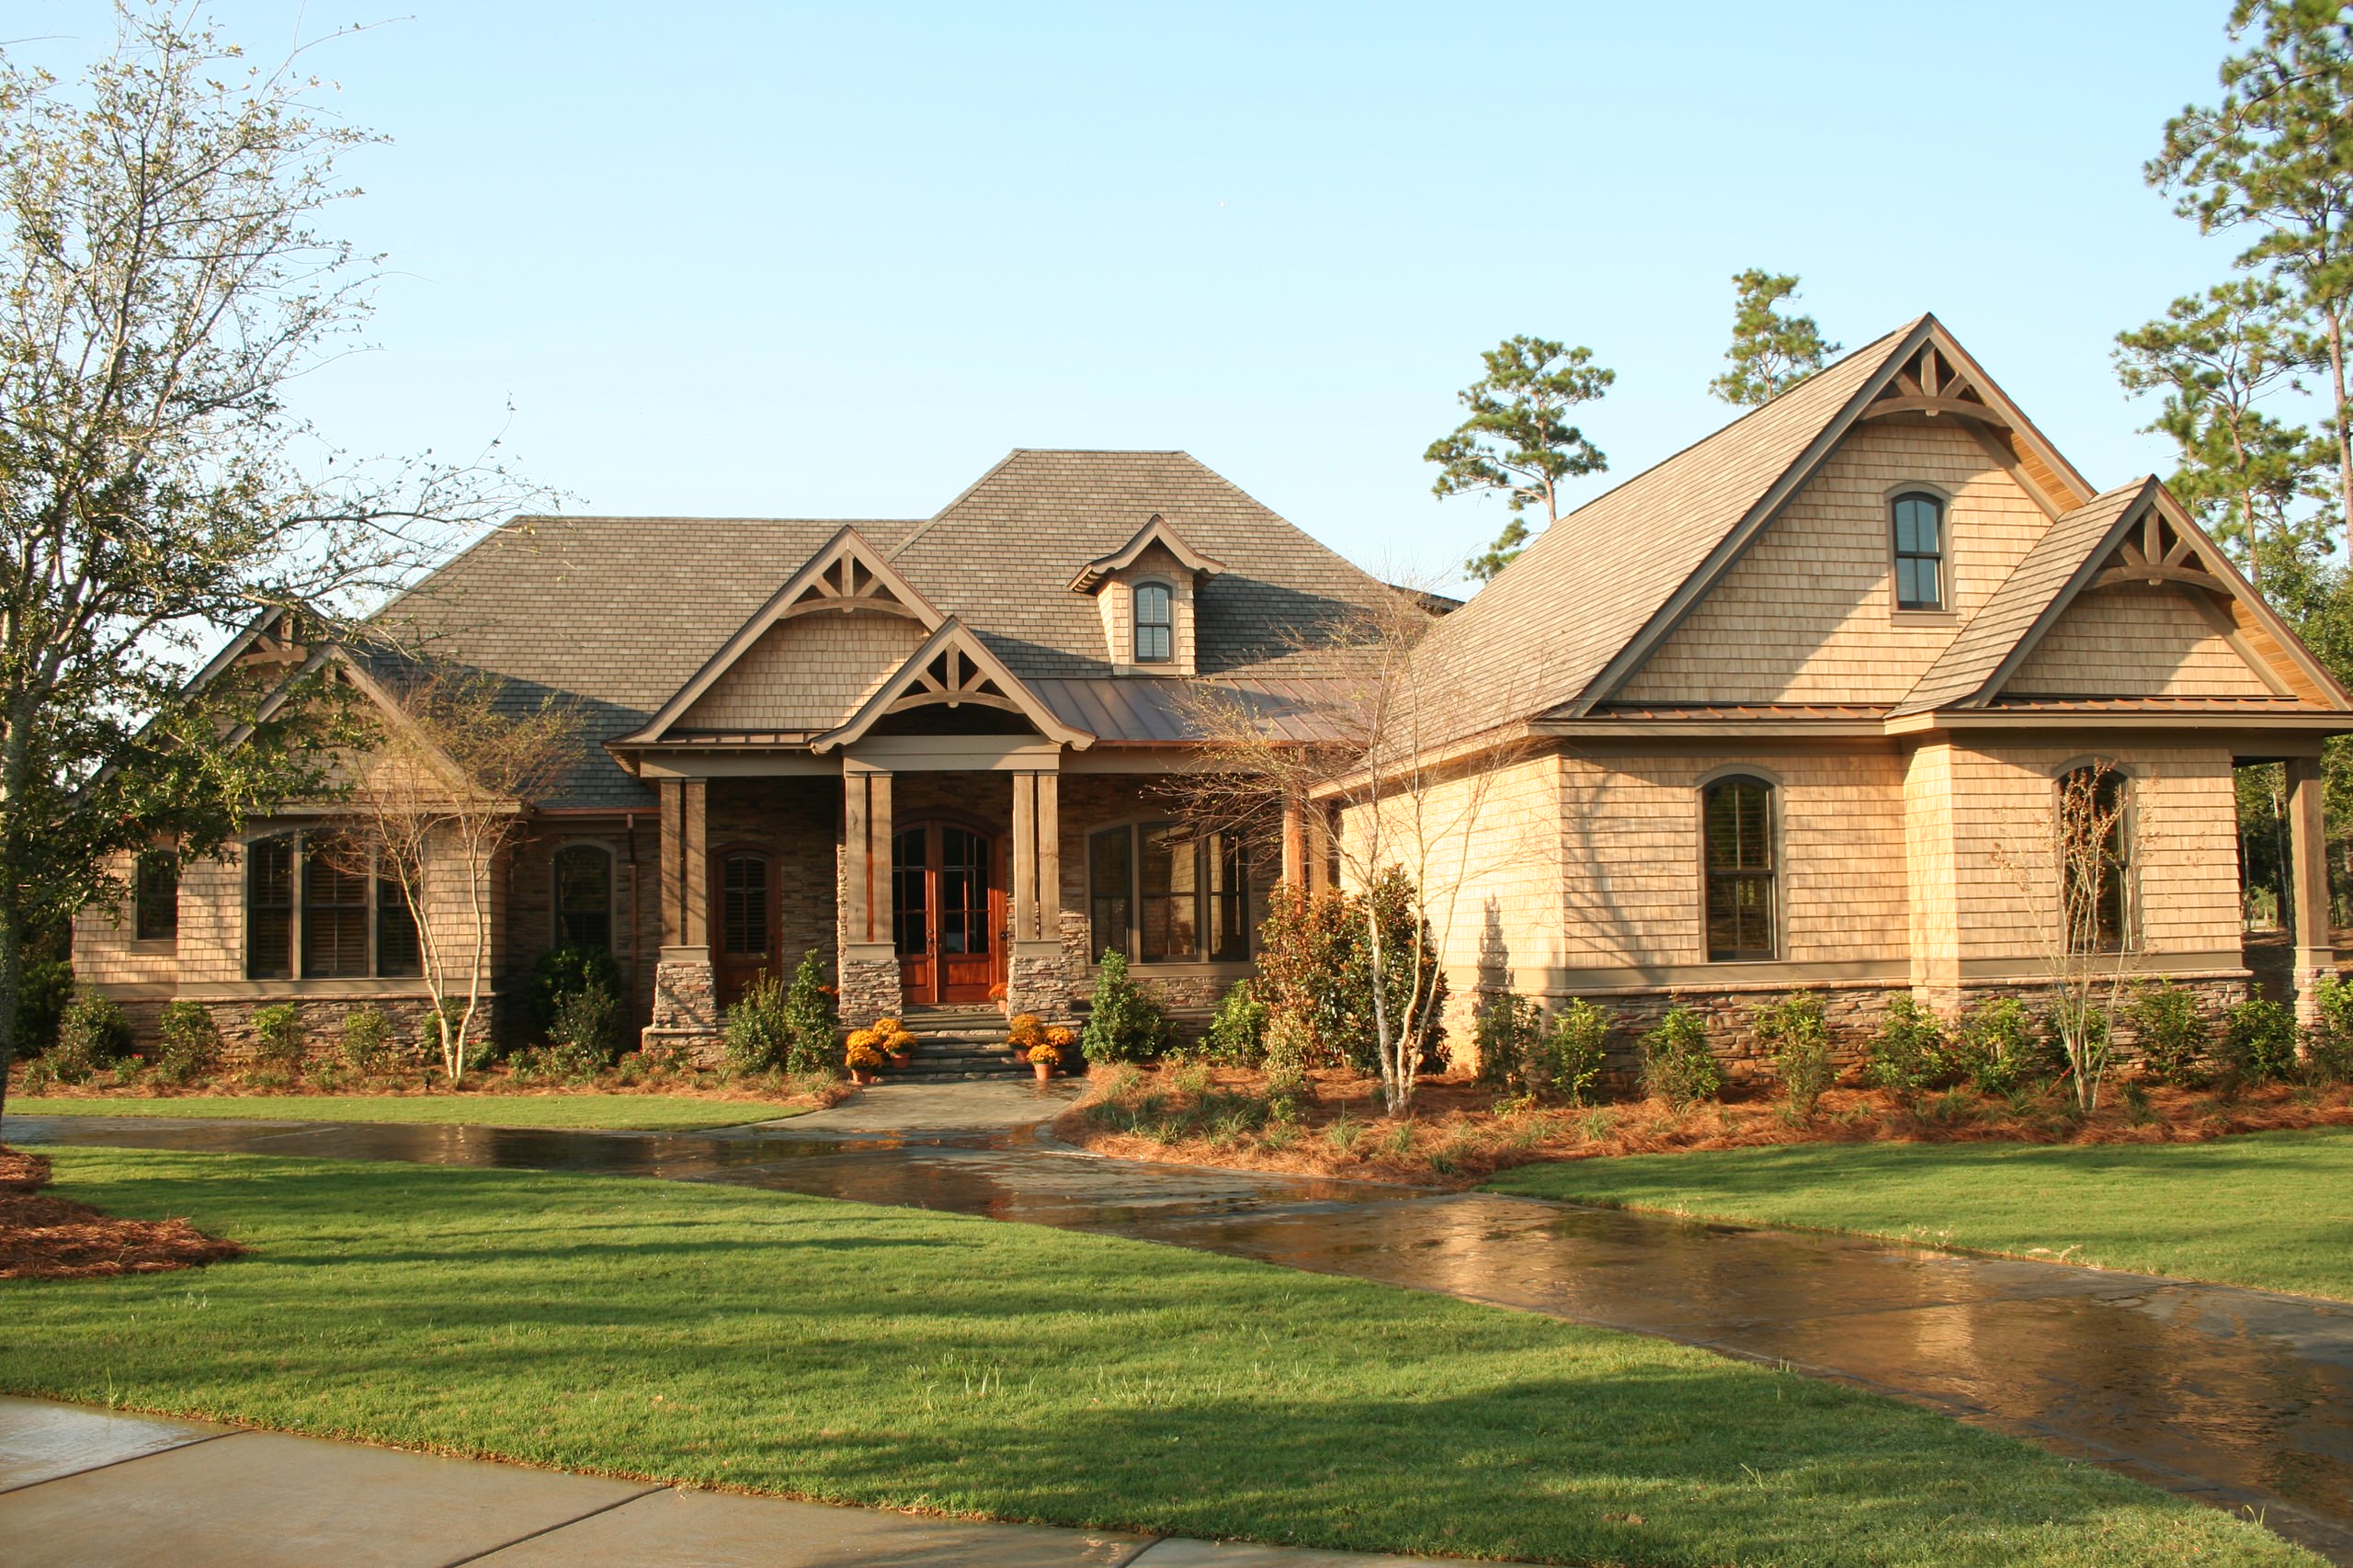 Fairhope, Alabama's 2008 Showcase Home